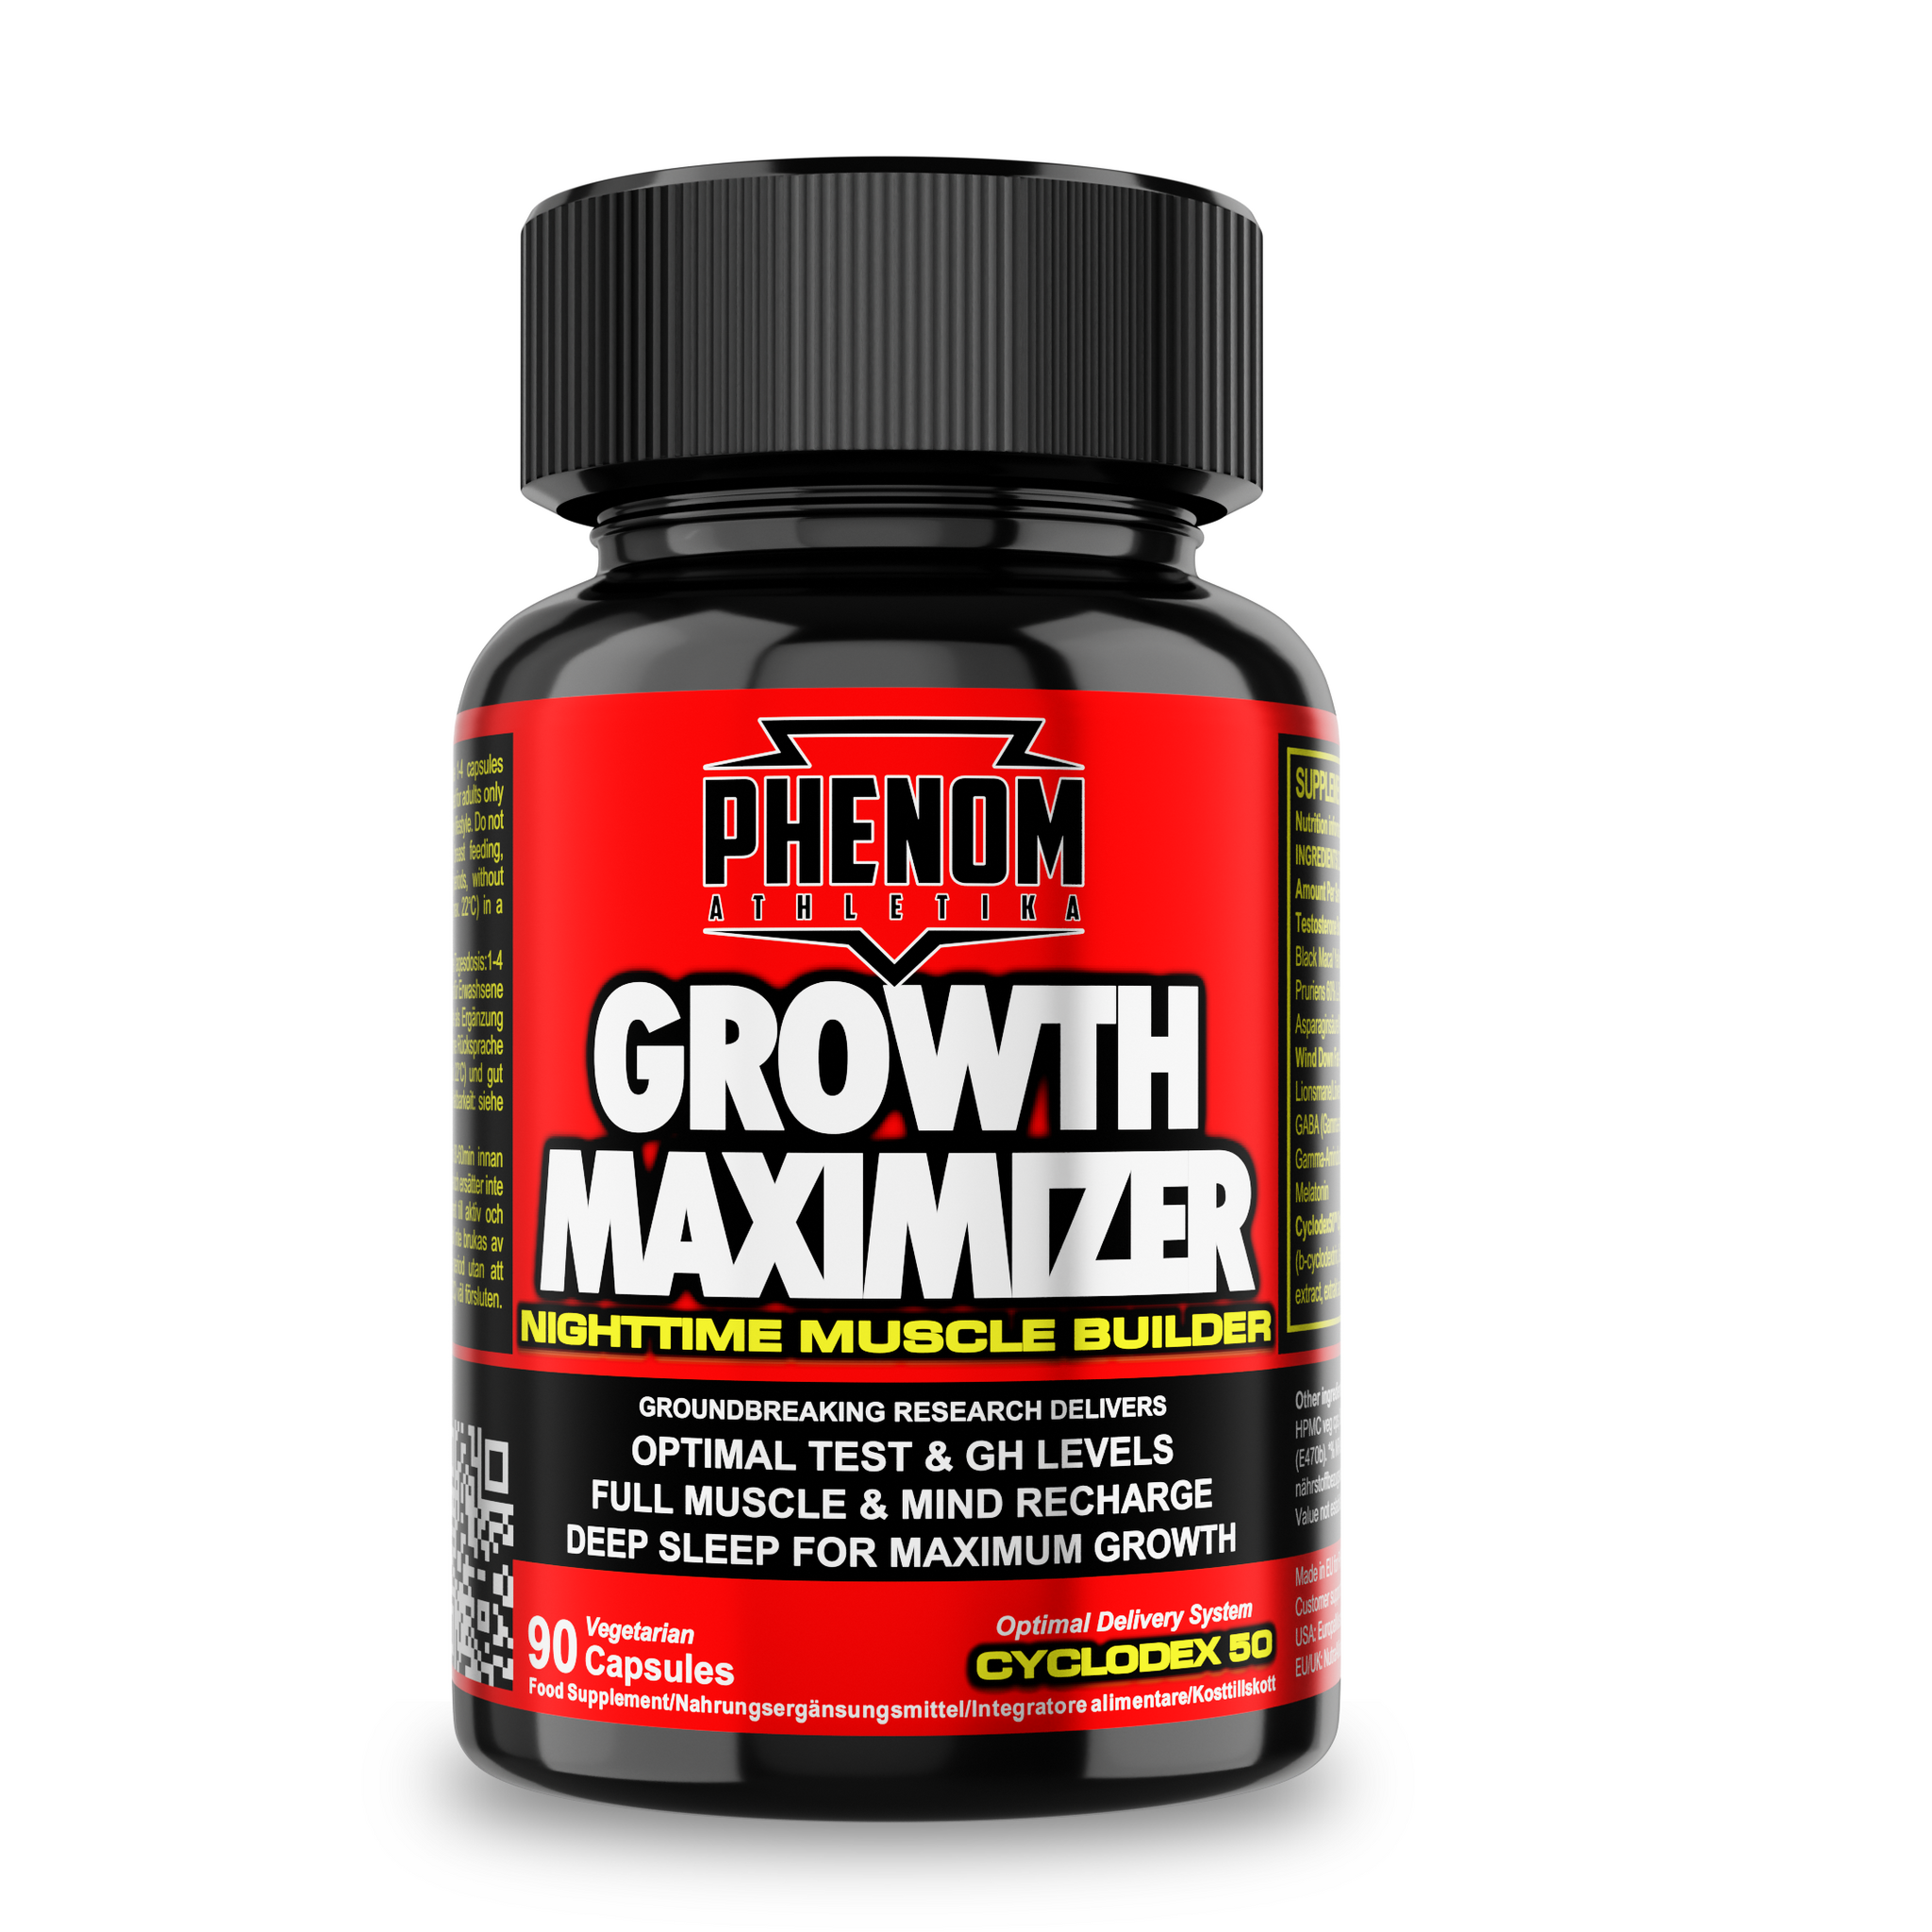 Growth Maximizer